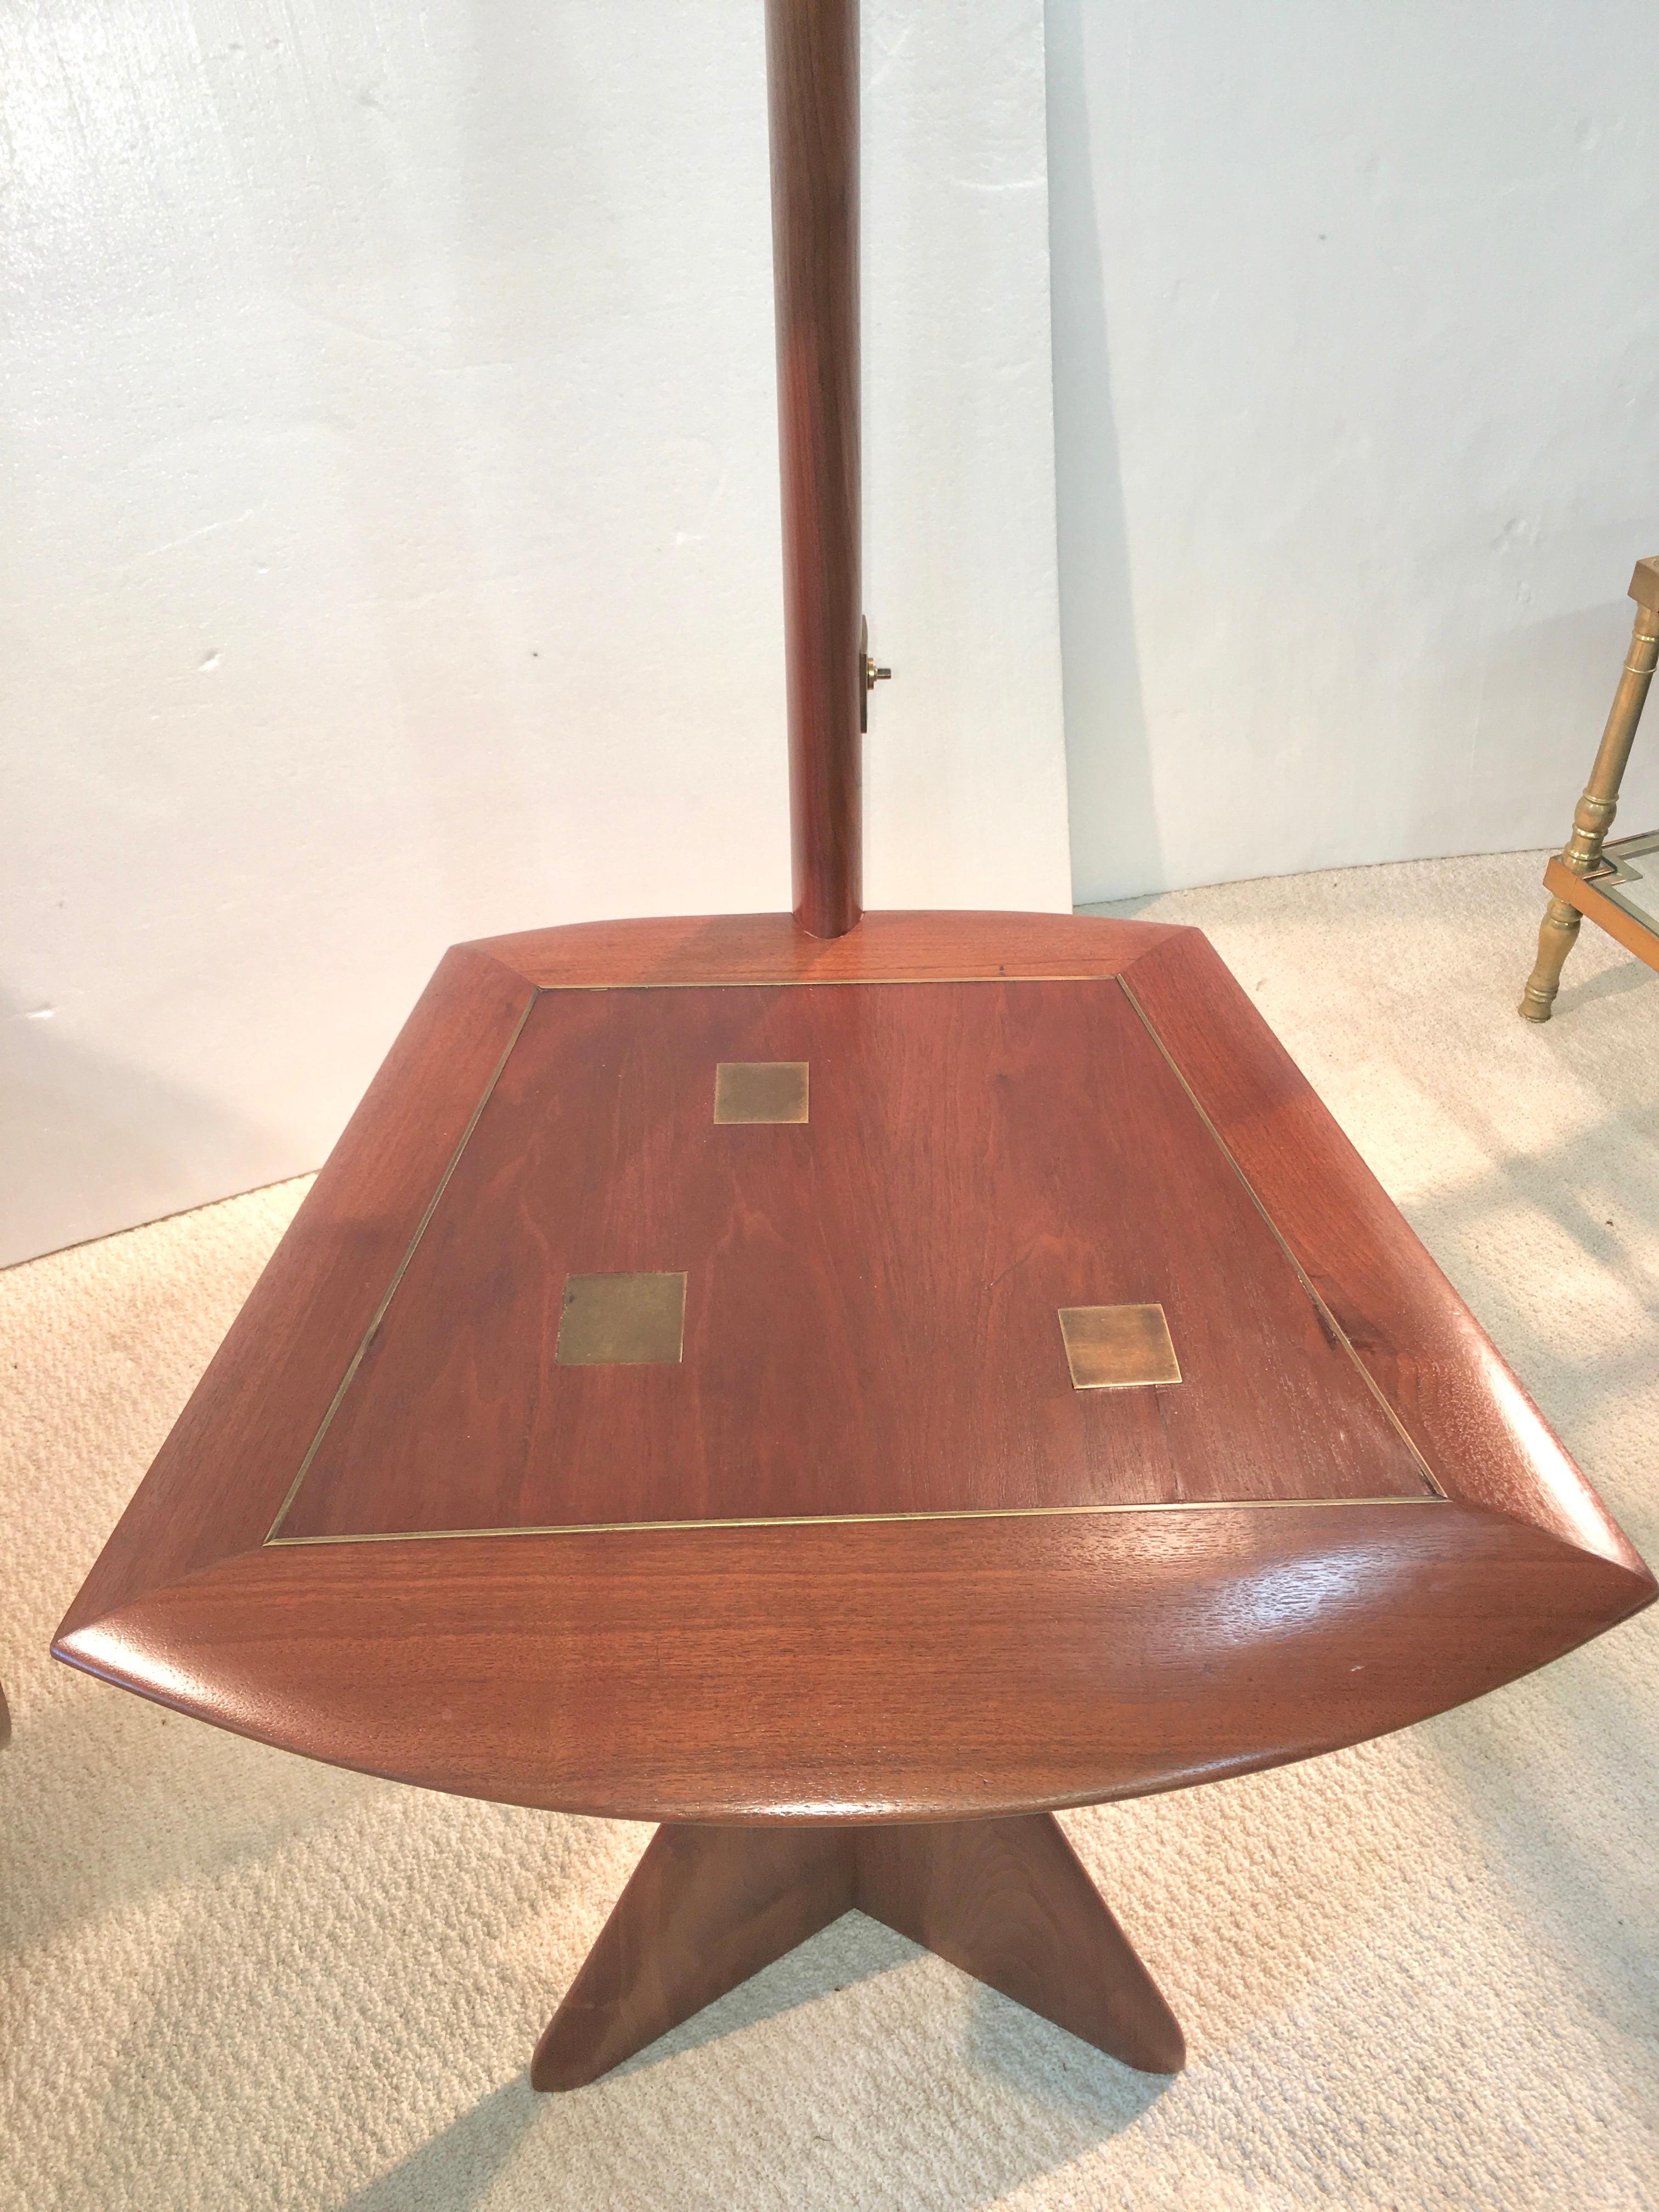 Samson Berman Studio Floor Lamp with Integrated Table For Sale 3